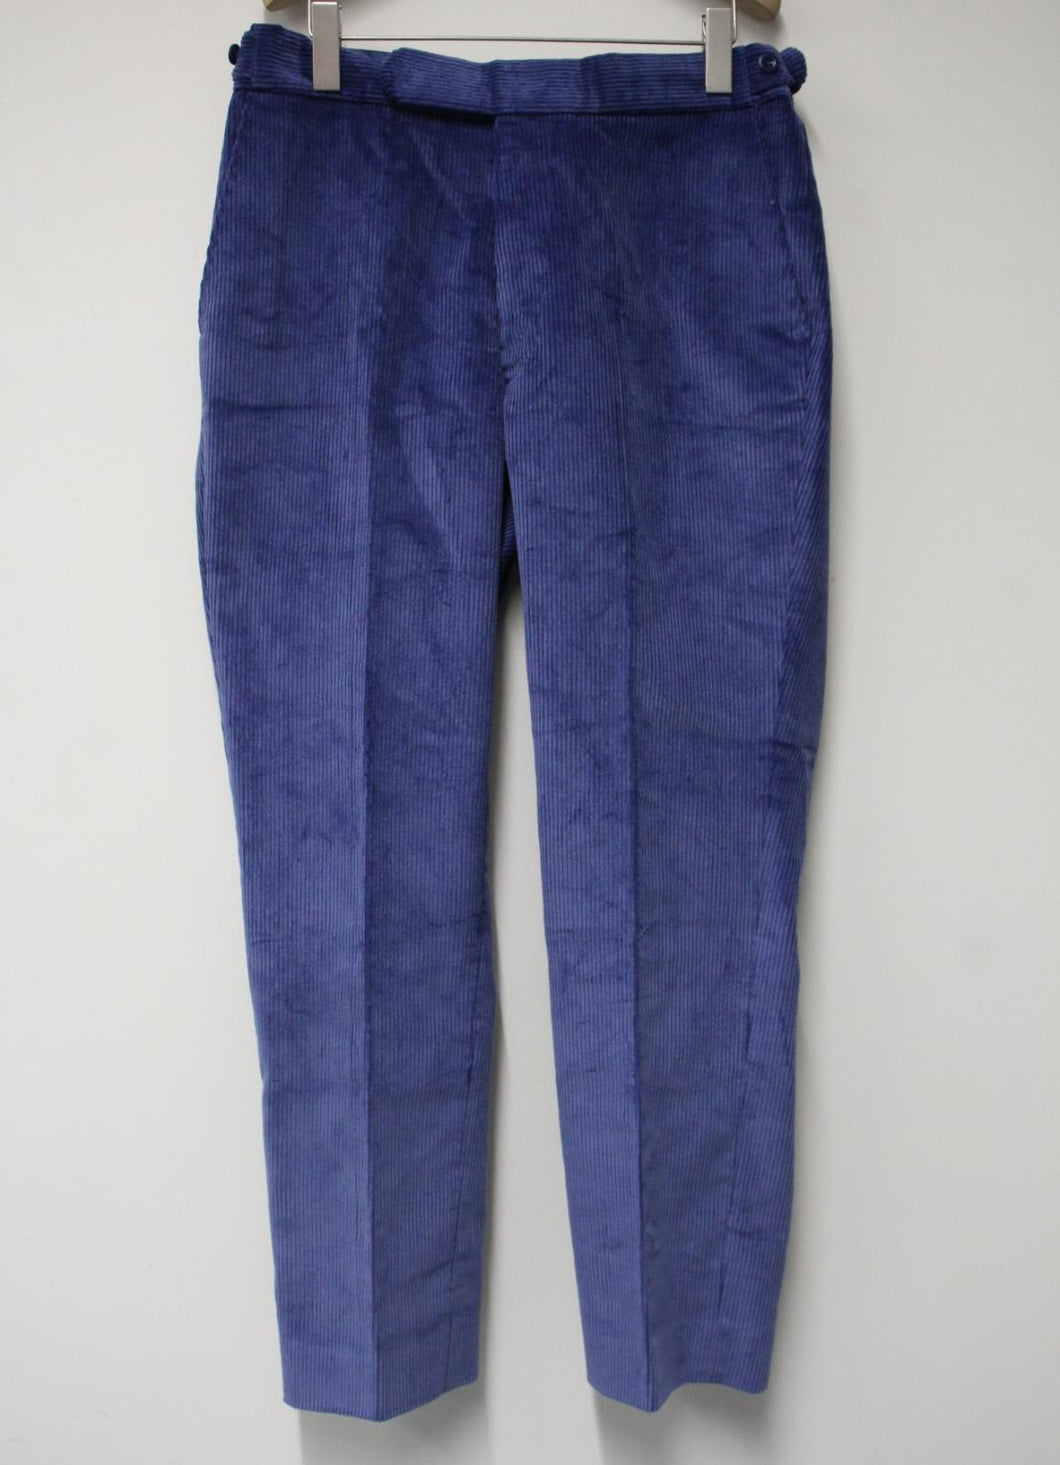 CORDINGS Blue Corduroy Cotton Regular Fit Trousers W36 L32 RRP120 NEW